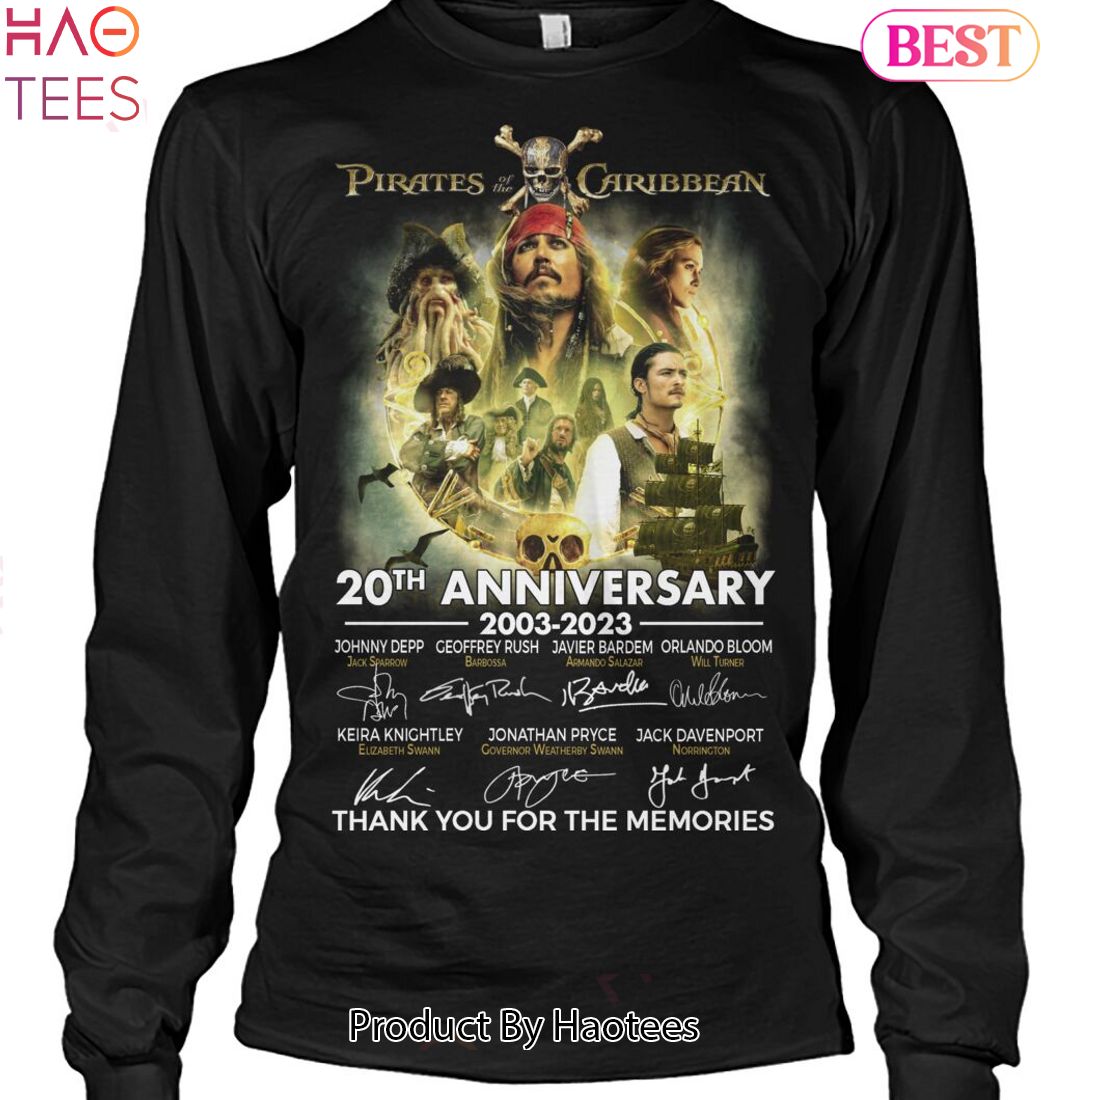 Pirates Of The Caribbean Funny Shirt, Disney Pirates Long Sleeve